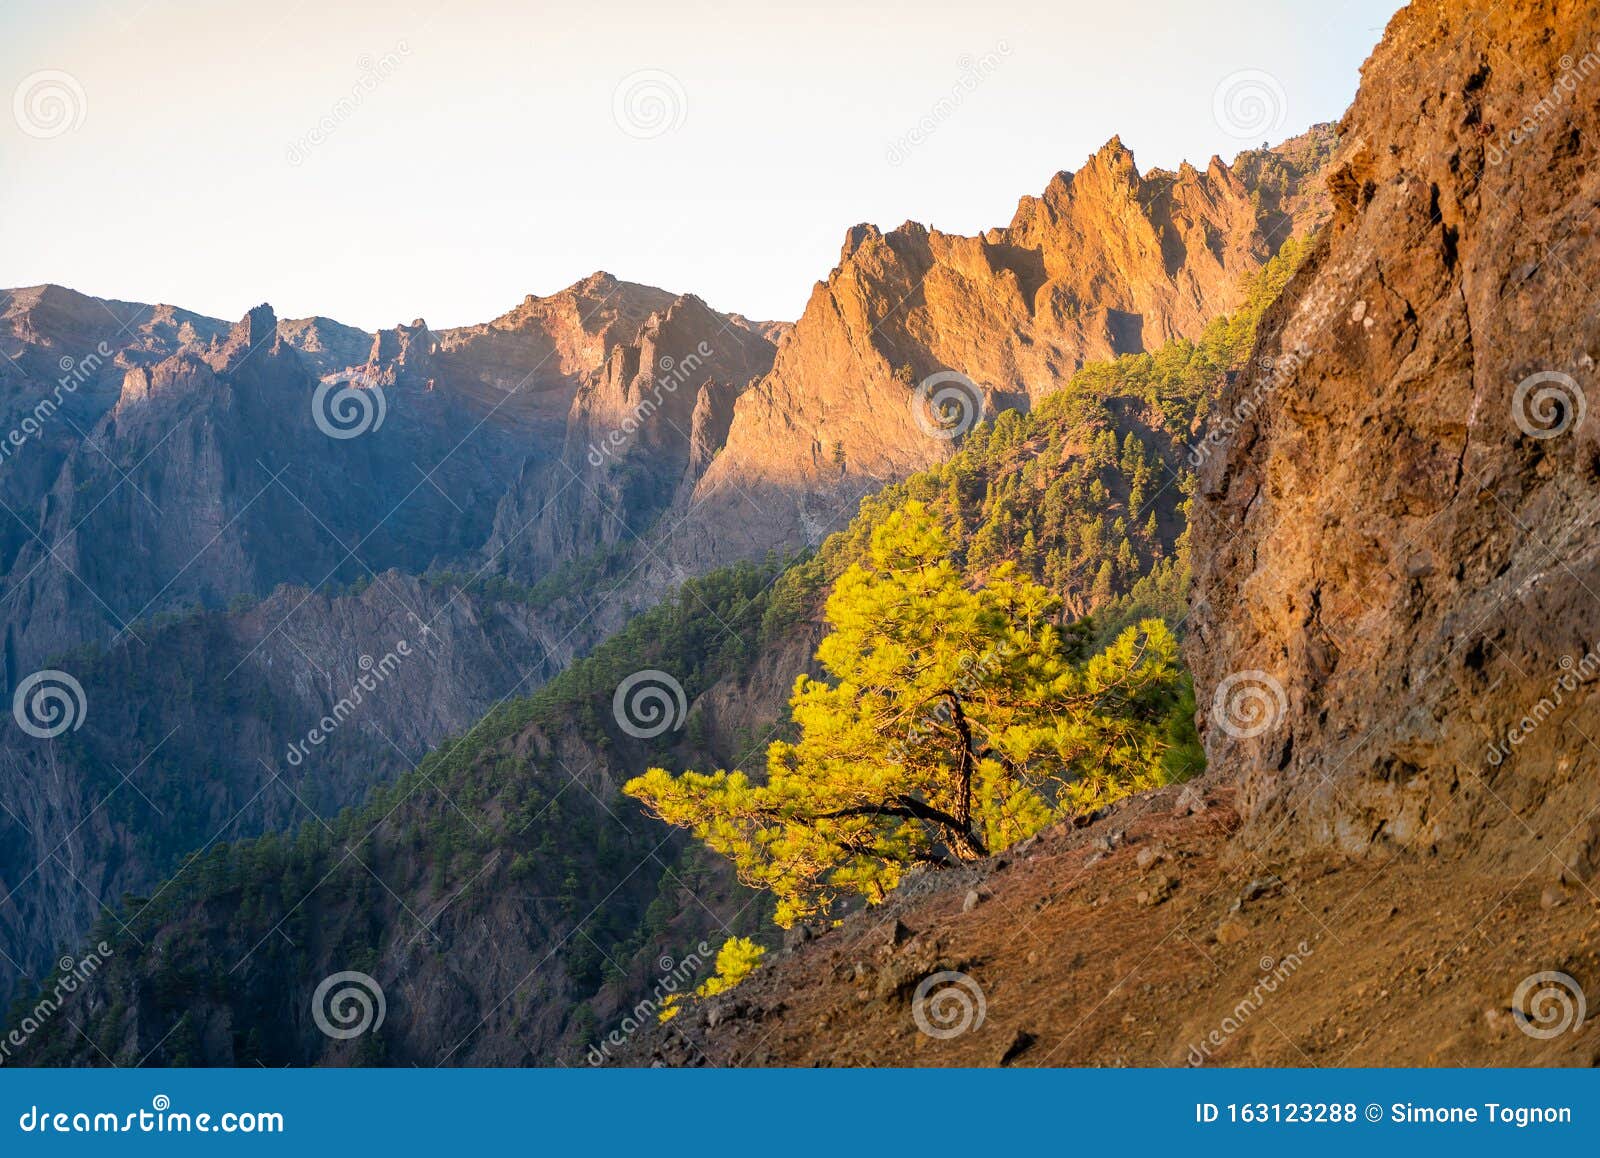 the woods cumbrecita mountains in the caldera de taburiente national park